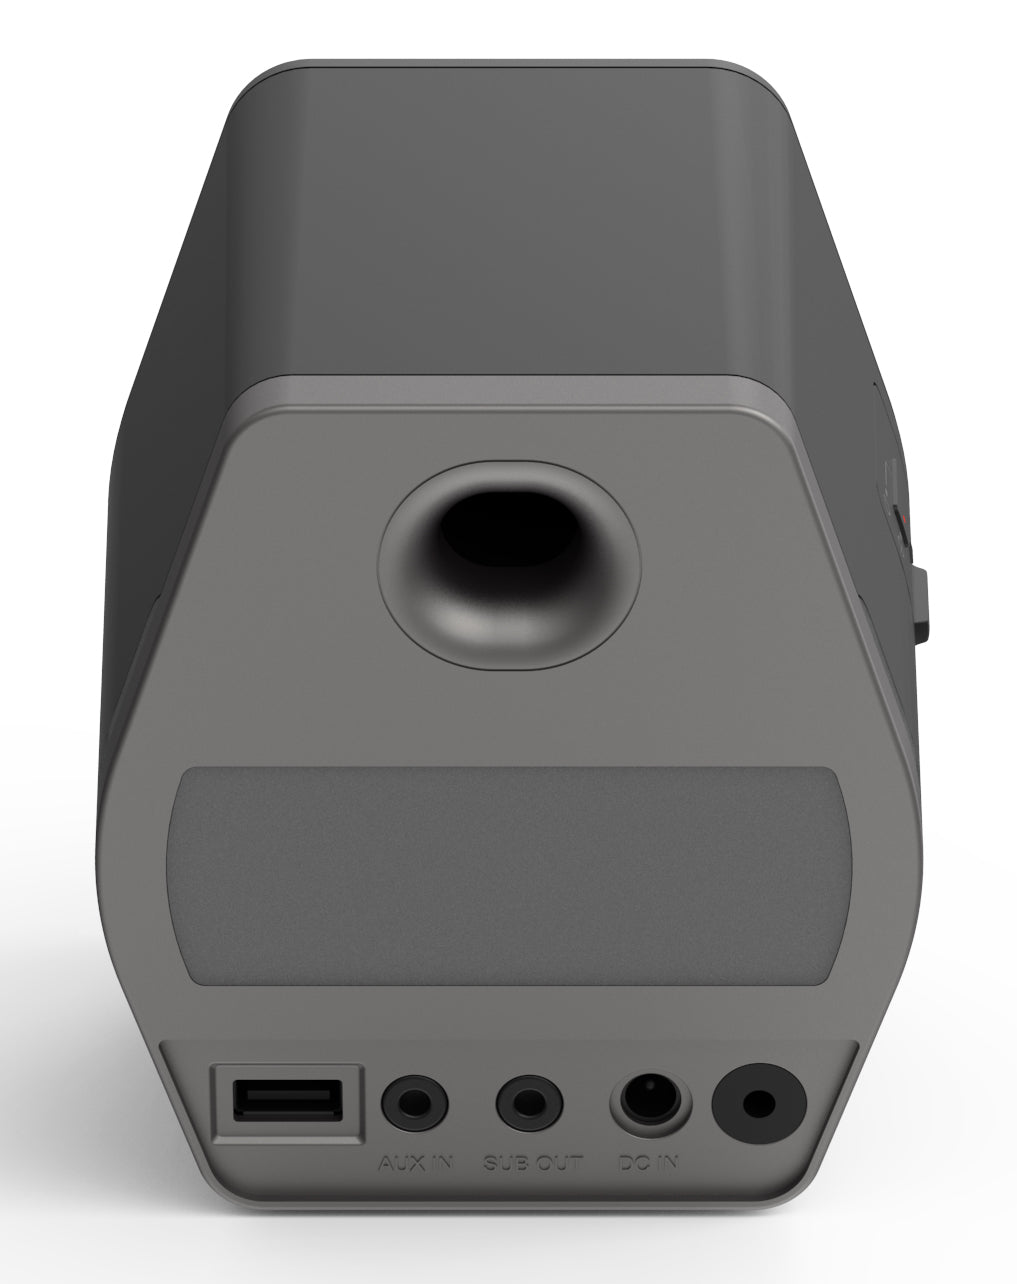 Edifier G2000 Bluetooth 2.0 Gaming Speakers With RGB Lighting - Black